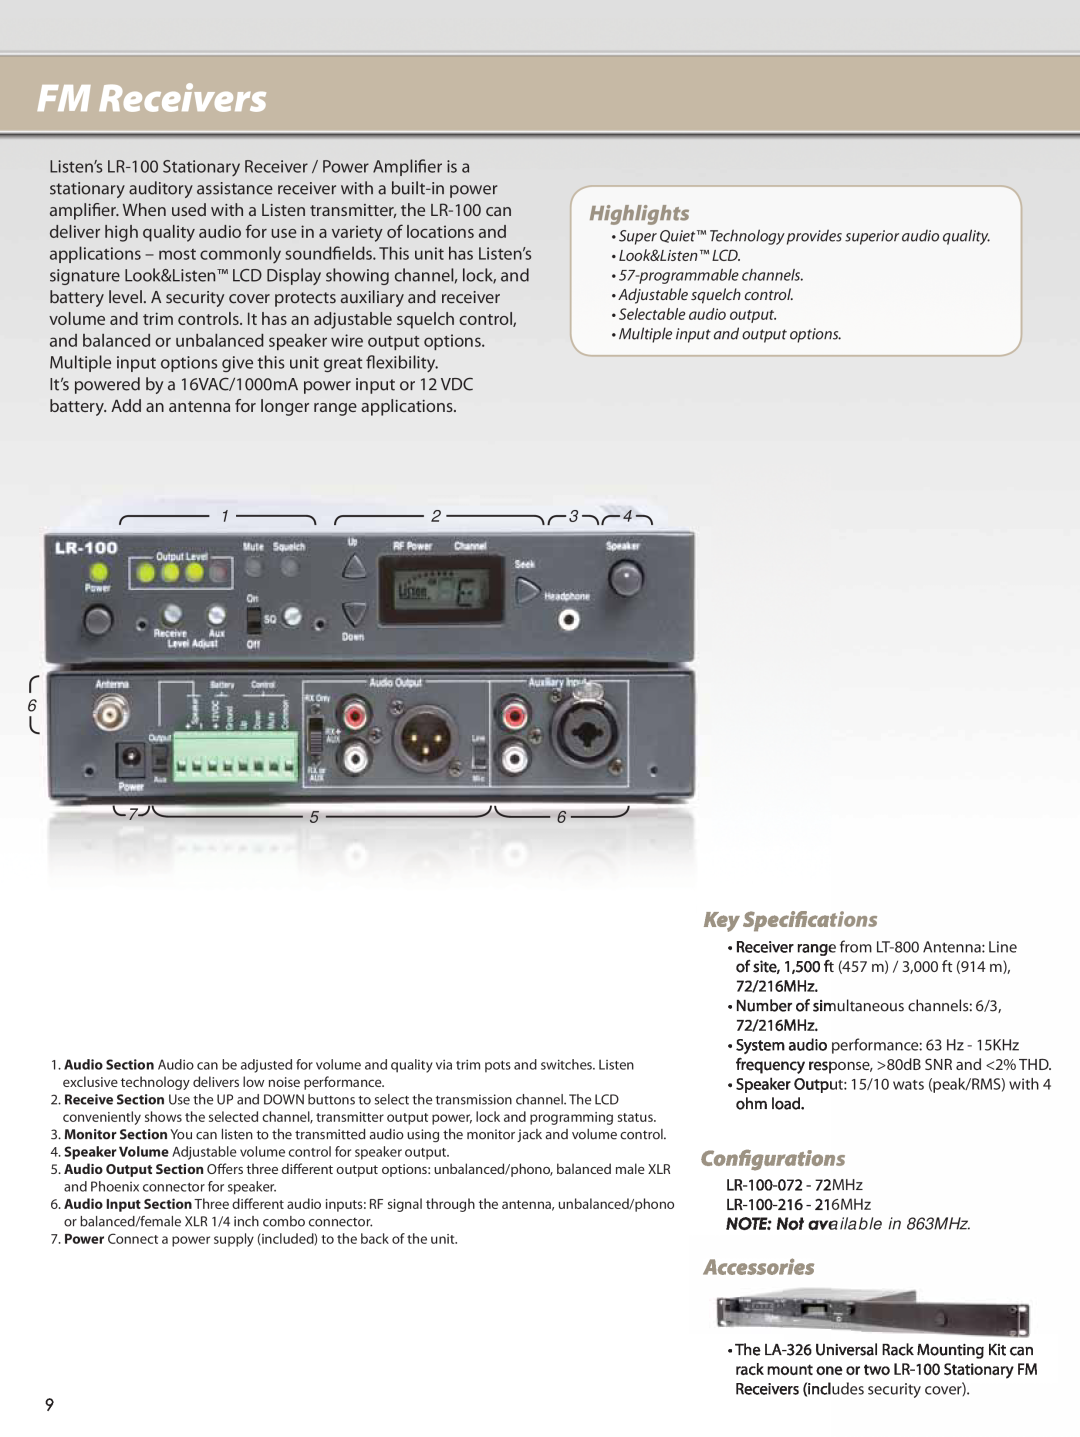 Listen Technologies LA-106 •Look&Listen LCD •57-programmablechannels, •Adjustable squelch control, 6 75, FM Receivers 